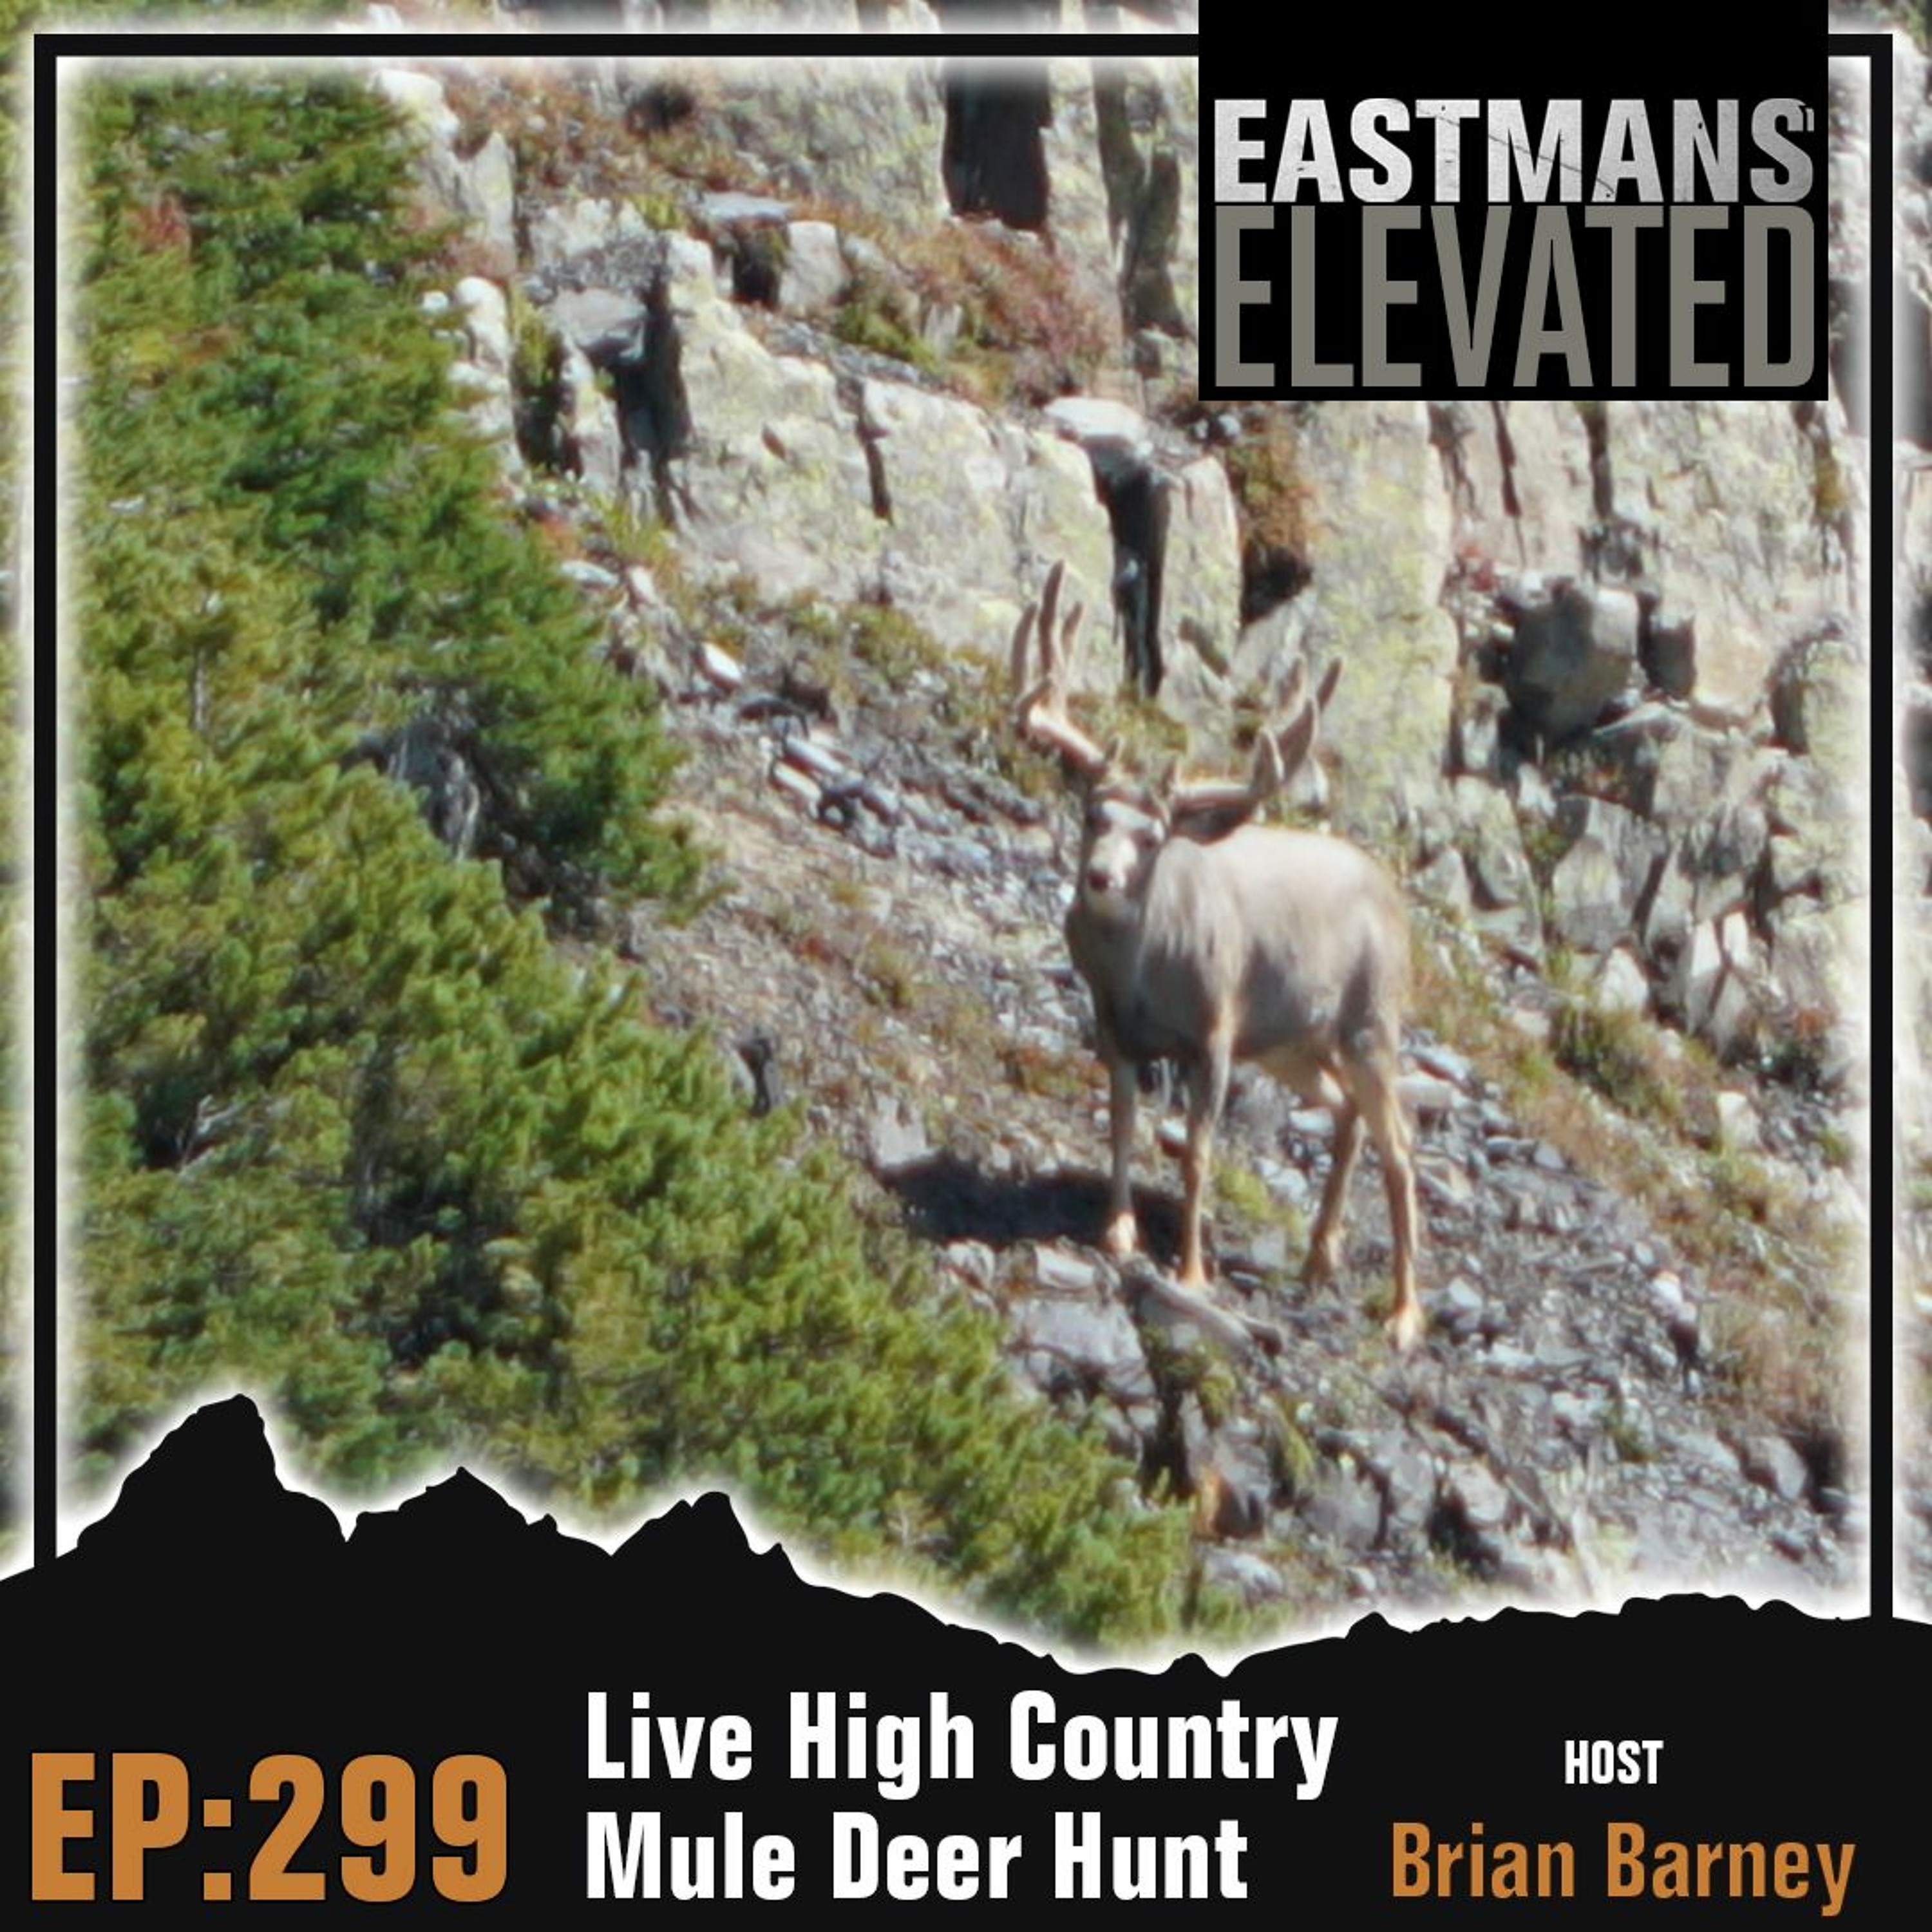 Episode 299: Live High Country Mule Deer Hunt